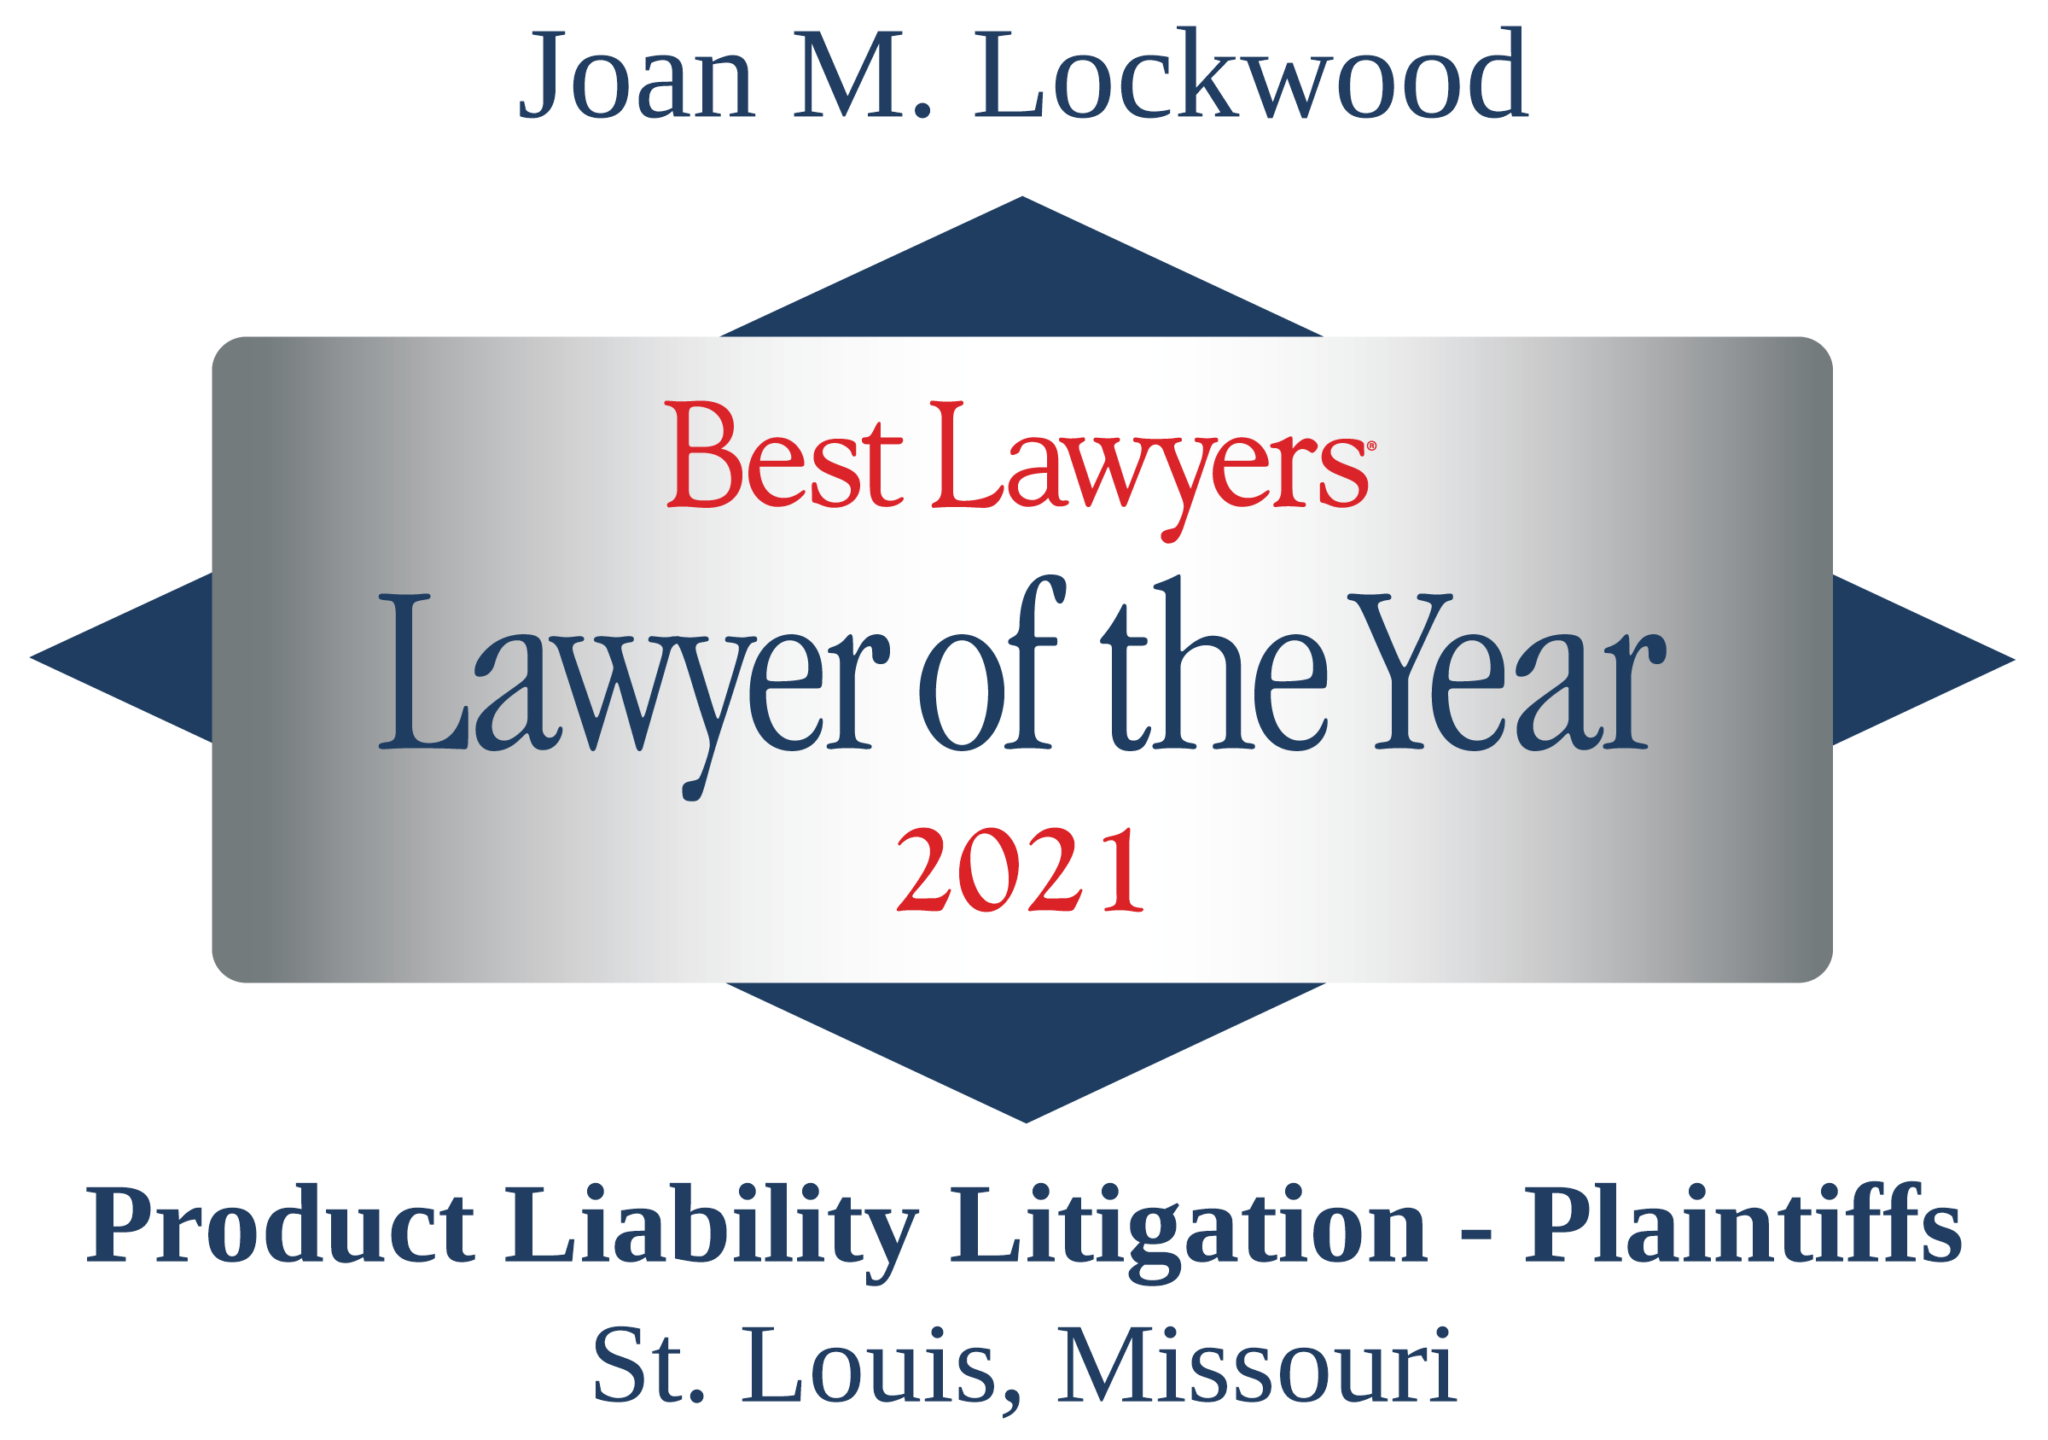 Joan Lockwood Lawyer of the Year 2021 badge